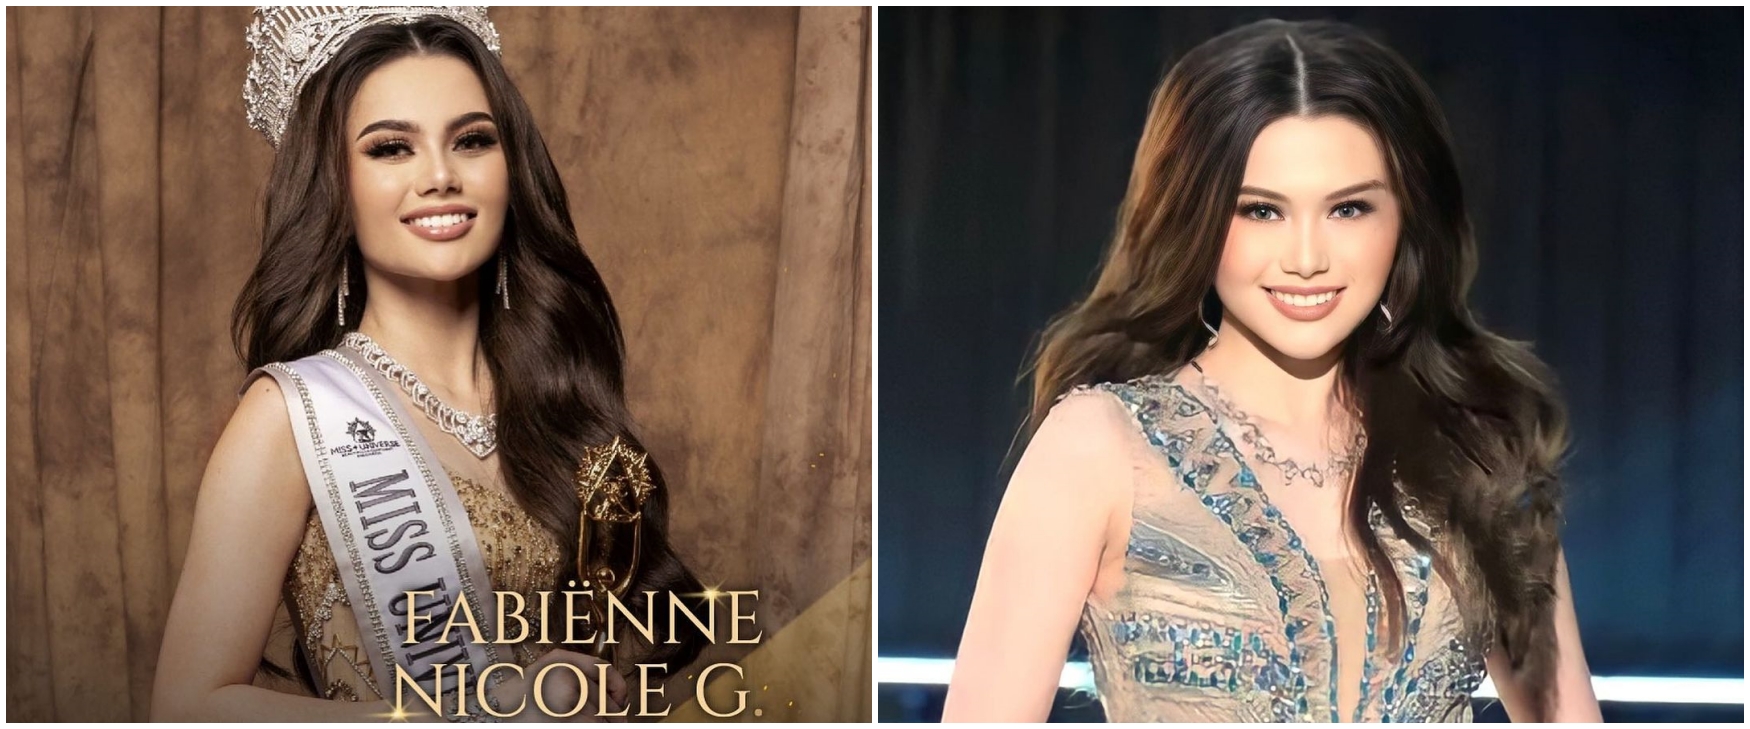 Klarifikasi Fabienne Nicole pemenang Miss Universe Indonesia terkait dugaan kasus body checking